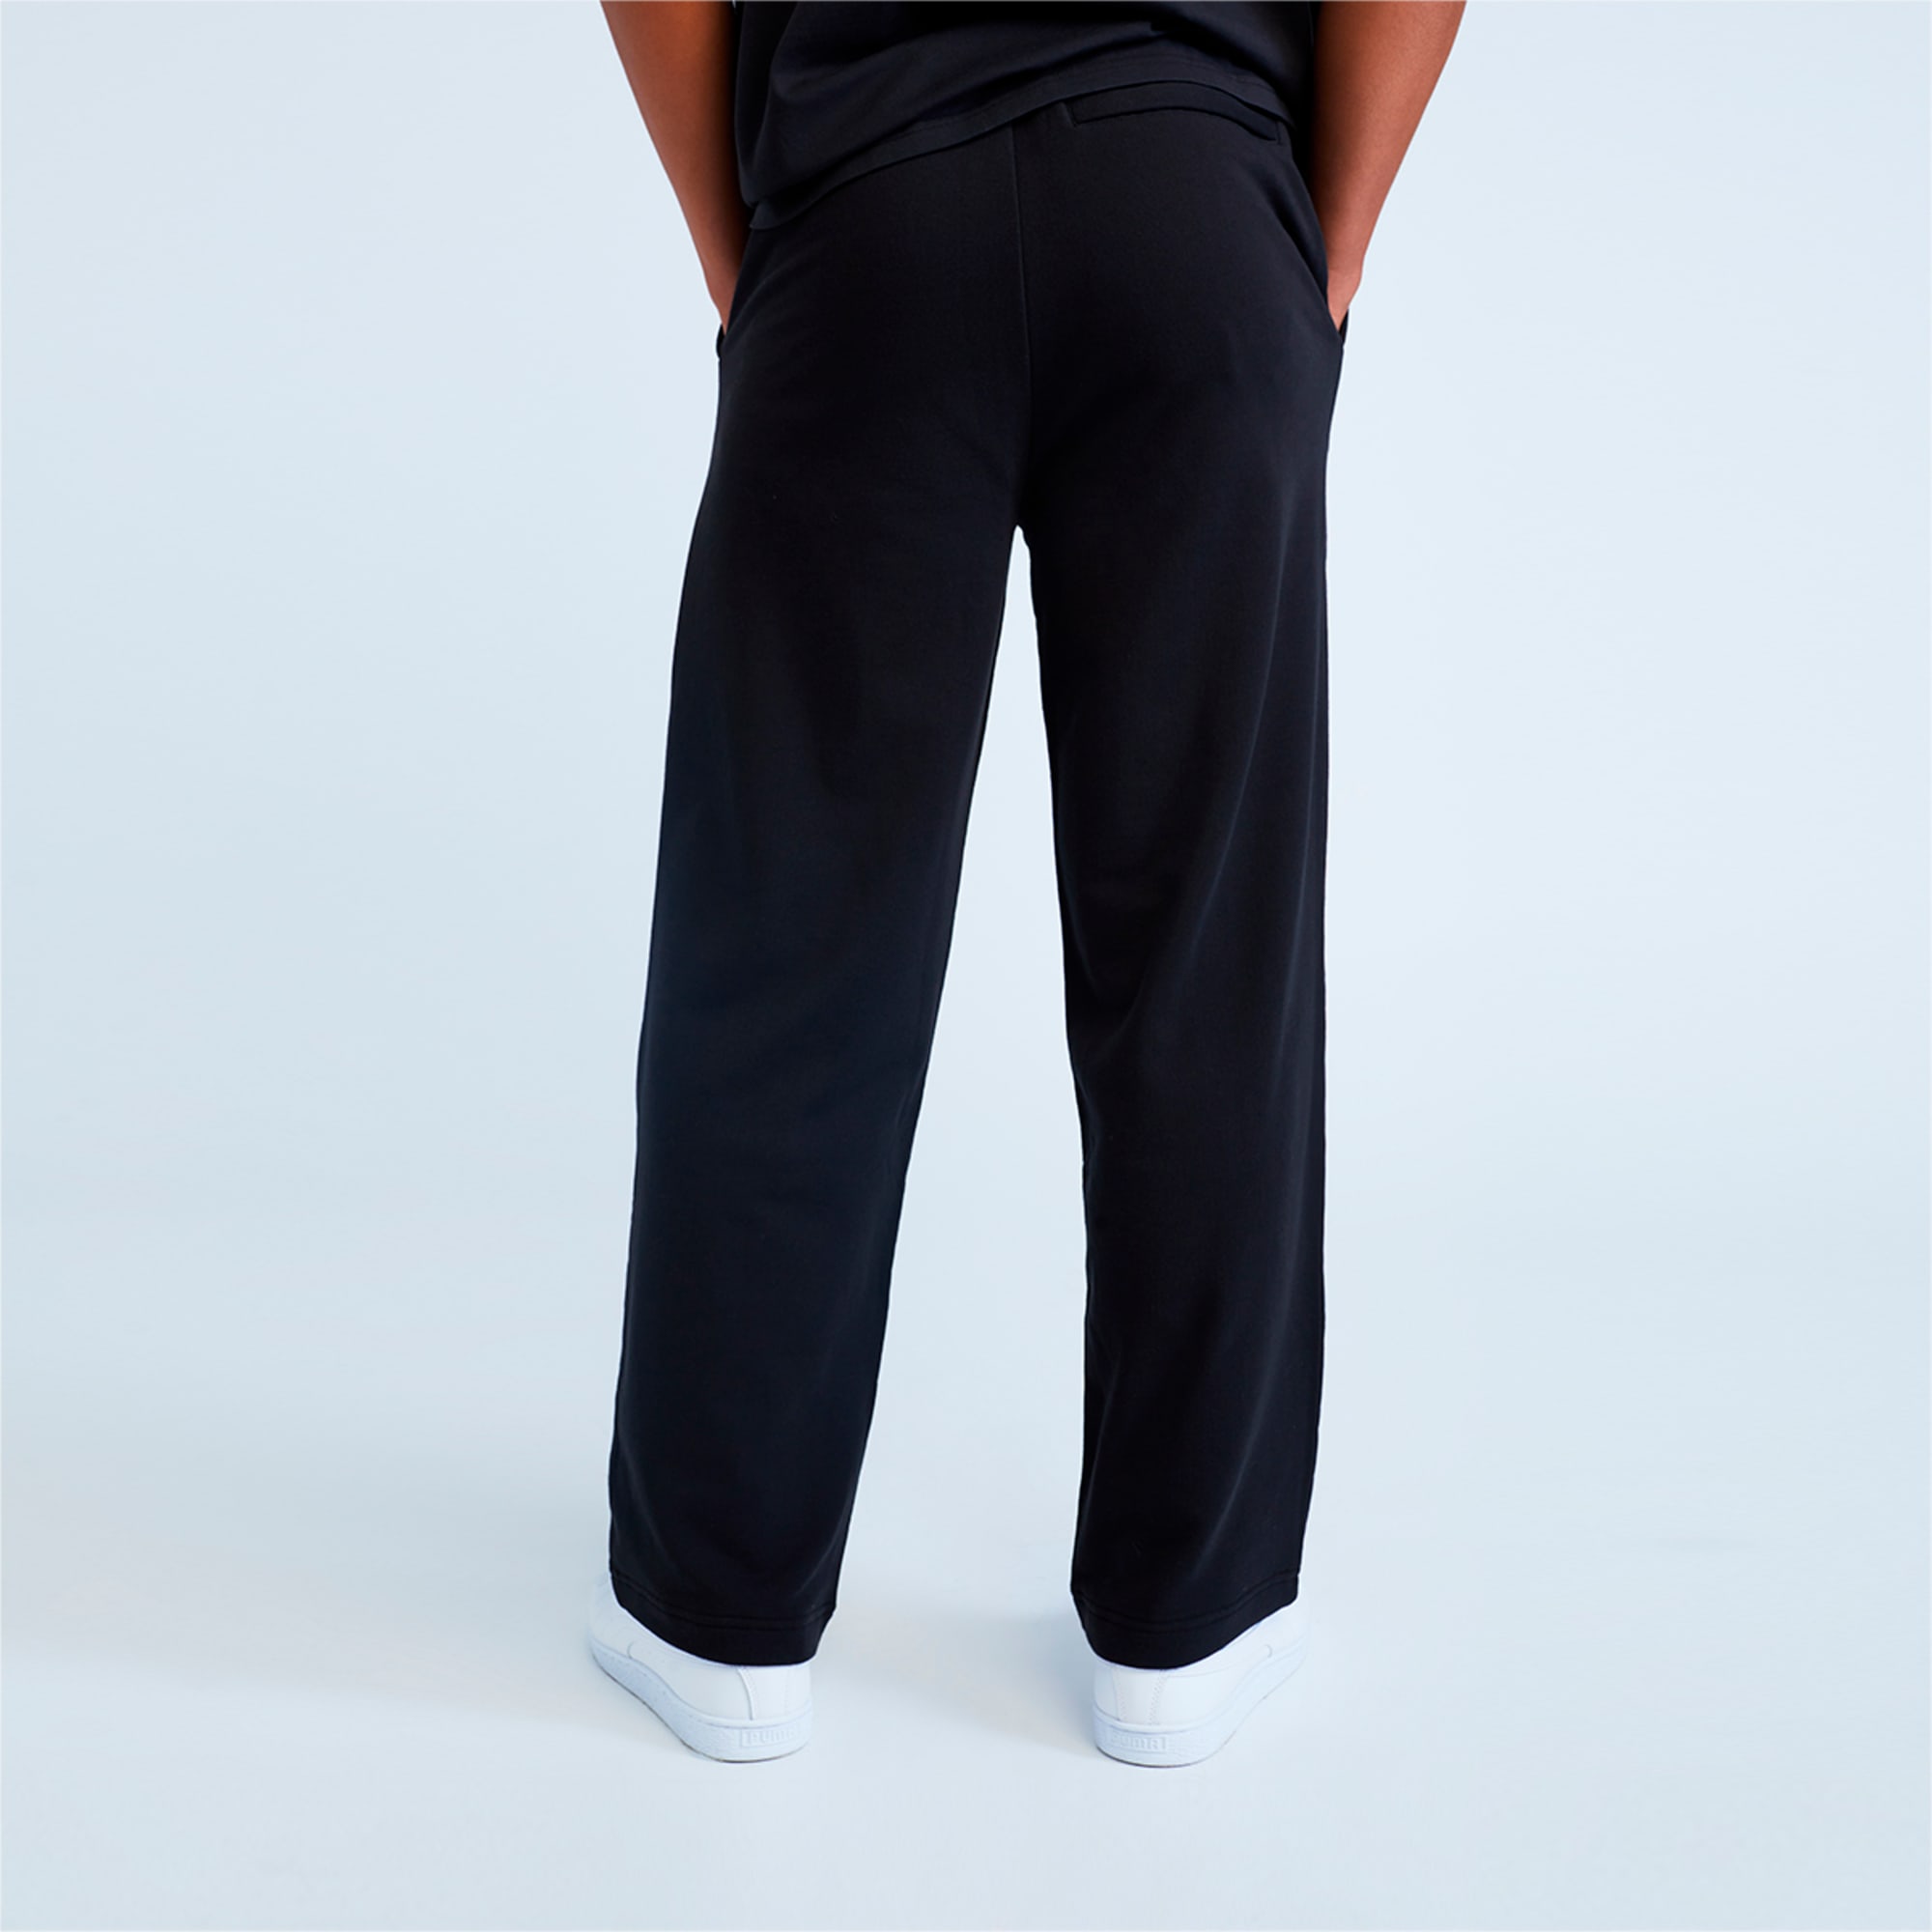 Black Sweatpants  Forever Classic Apparel Co.